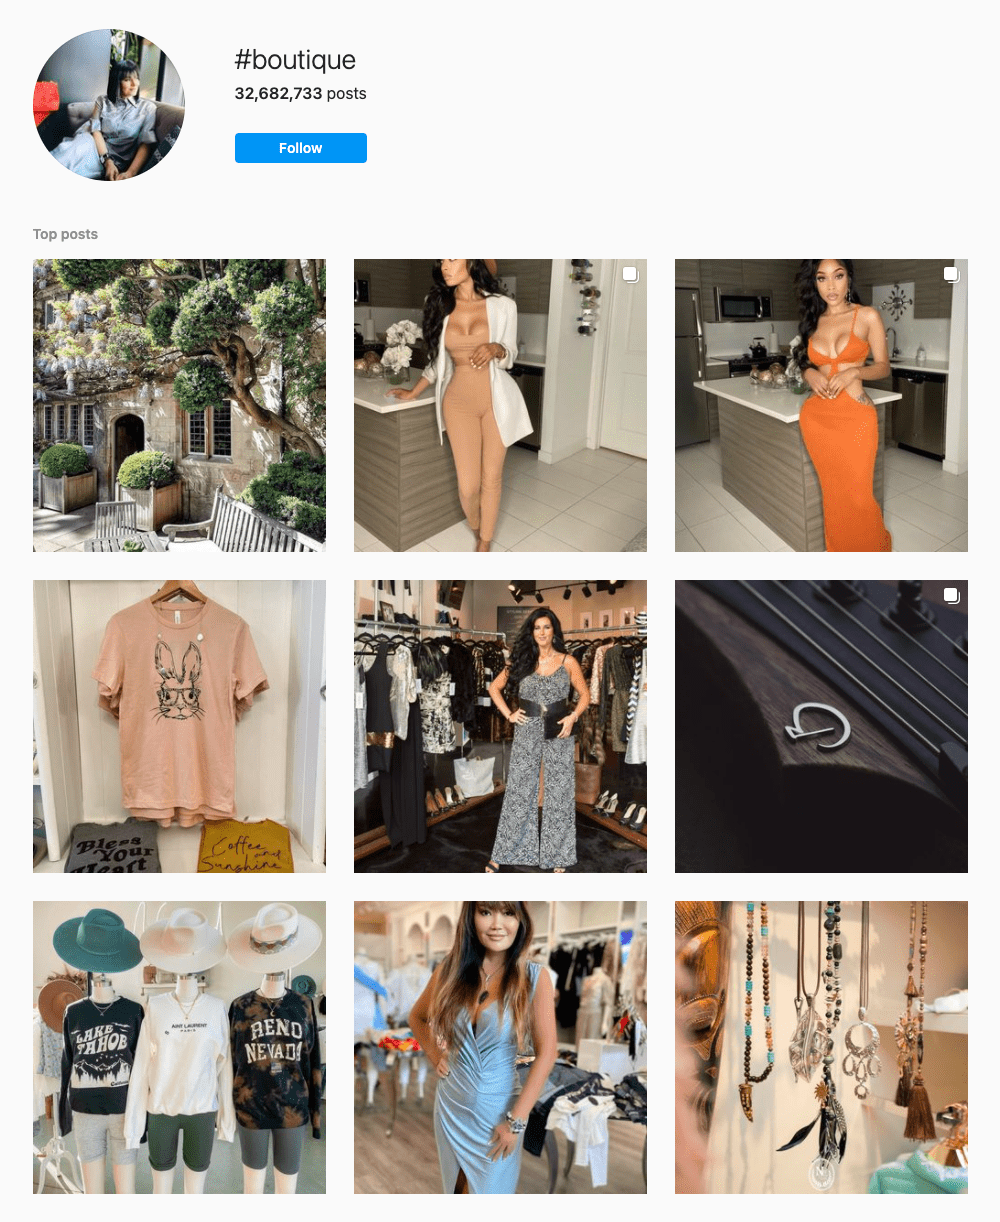 #boutique Hashtags for Instagram